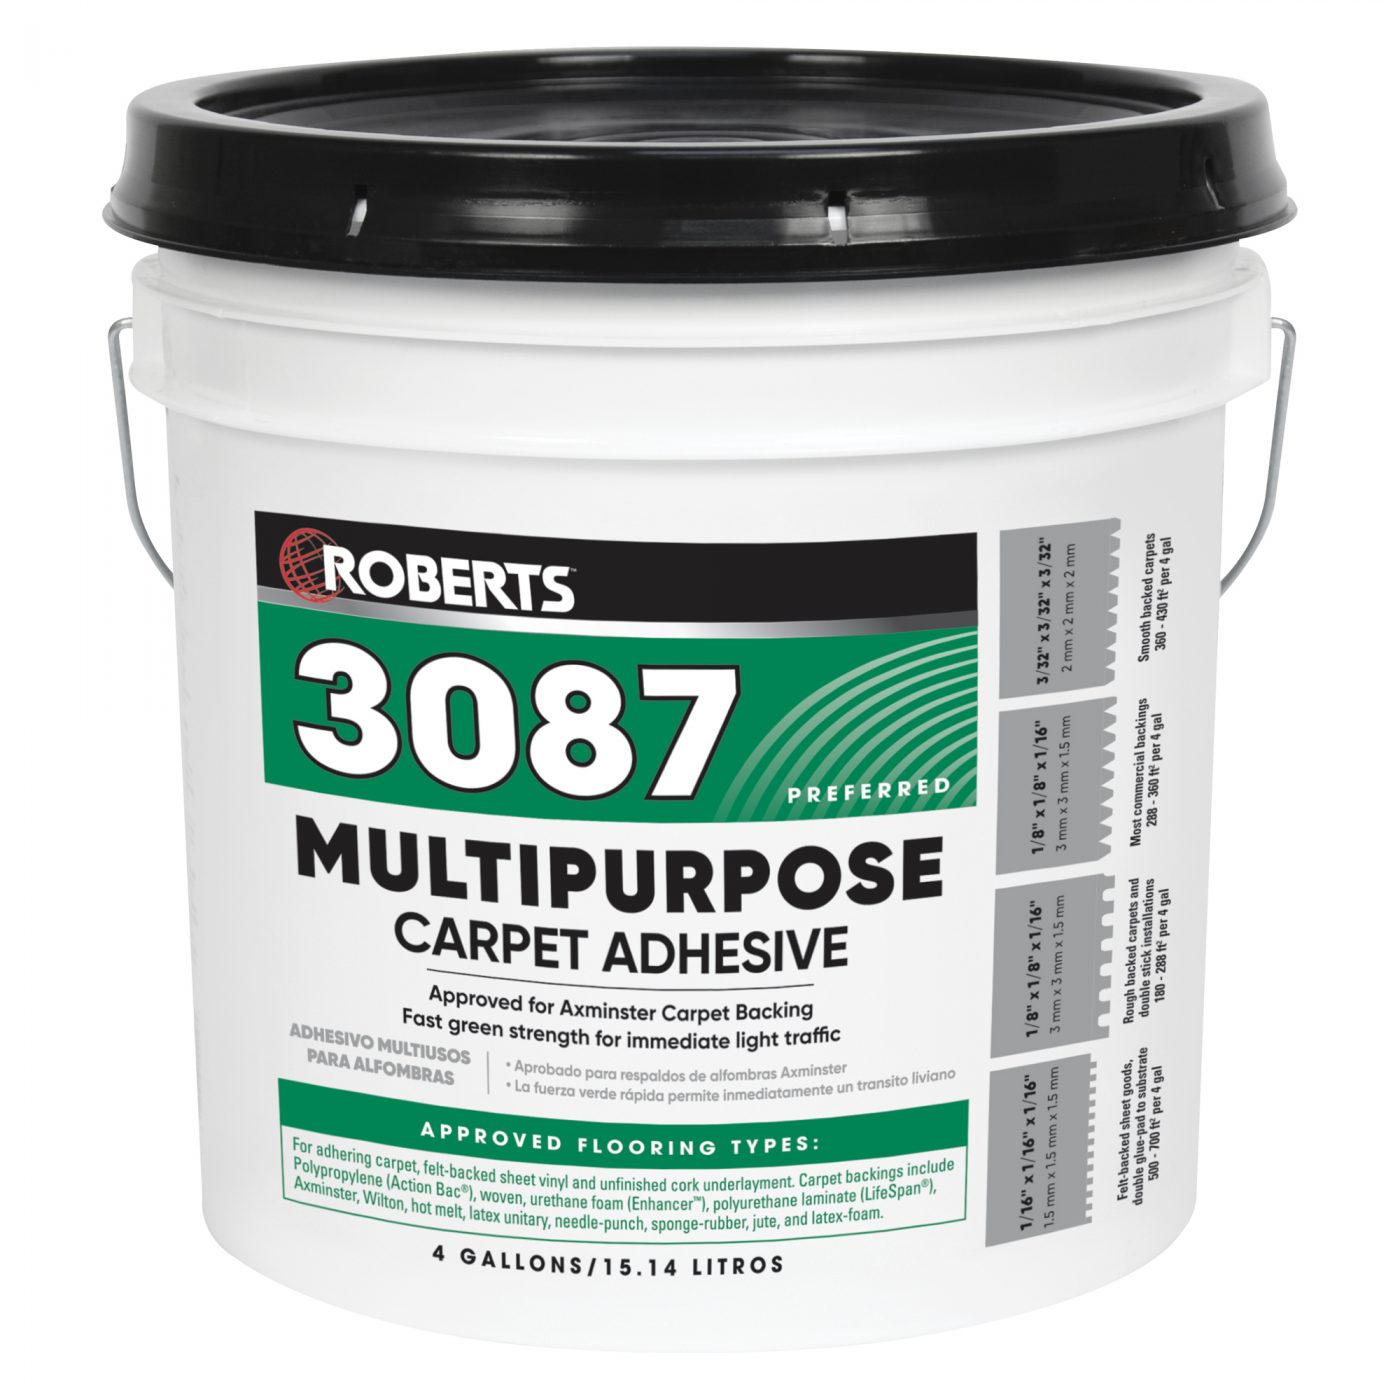 3087 Multipurpose Carpet Adhesive